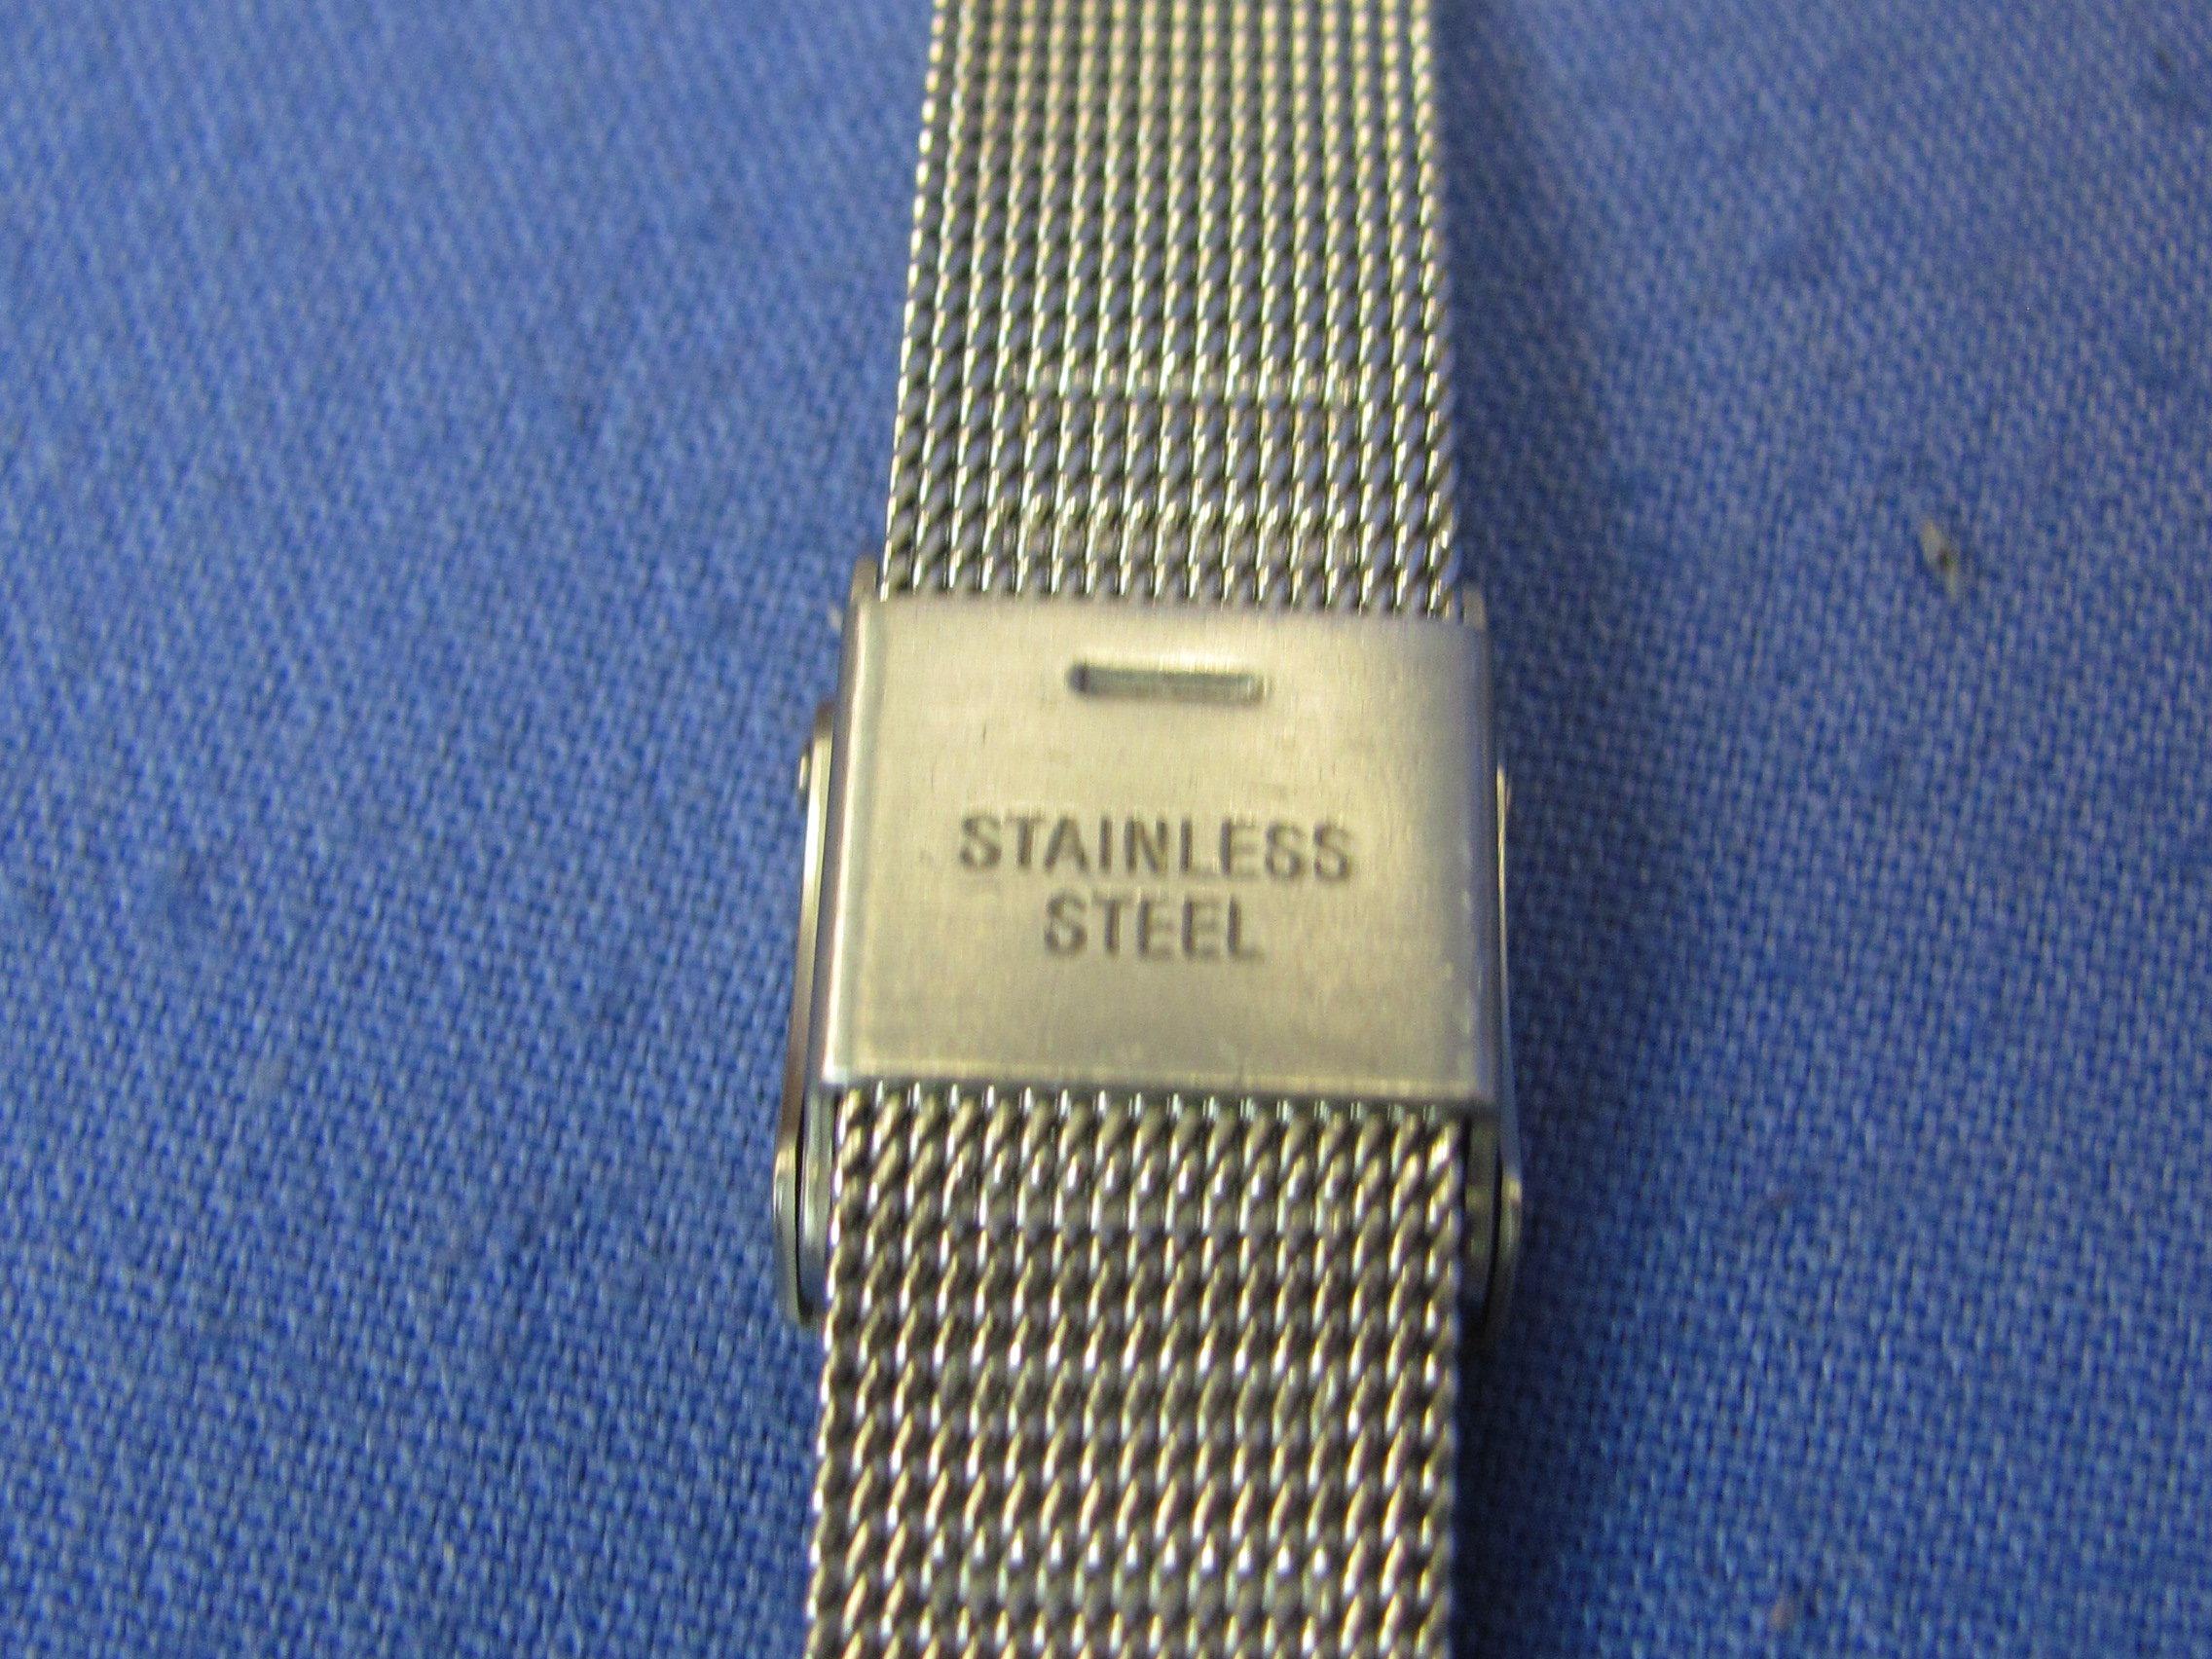 Stainless Steel Woman's Wristwatch by Skagen of Denmark – Running – Black Face